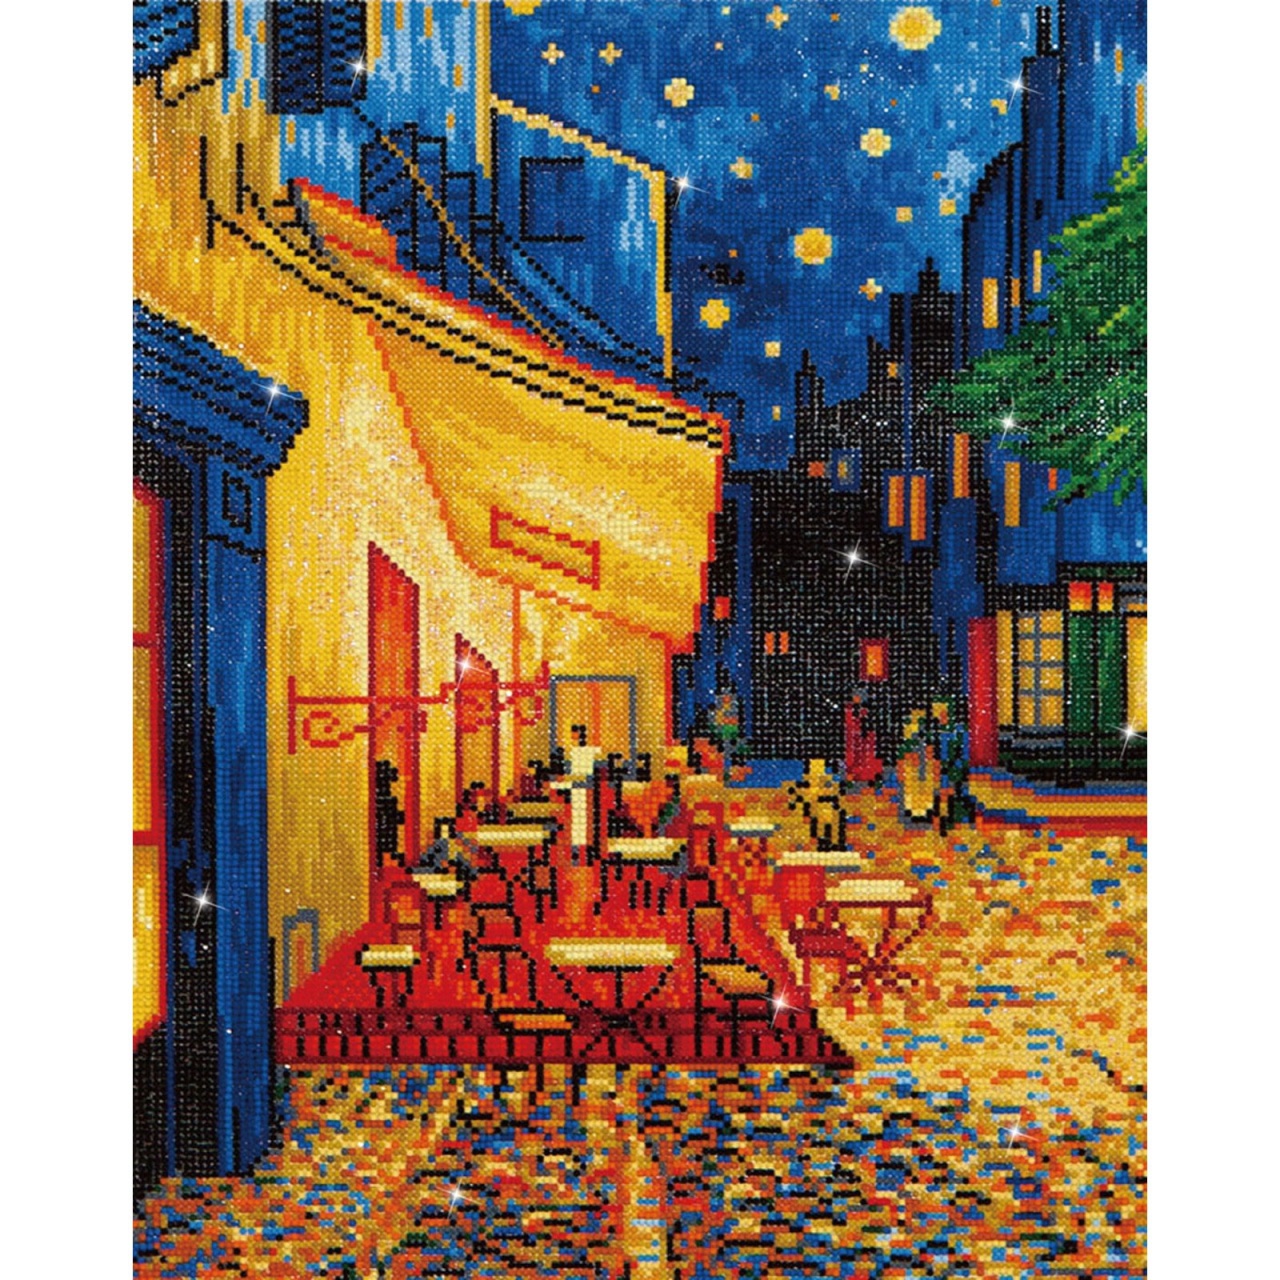 Diamont Dotz Cafe at Night Van Gogh